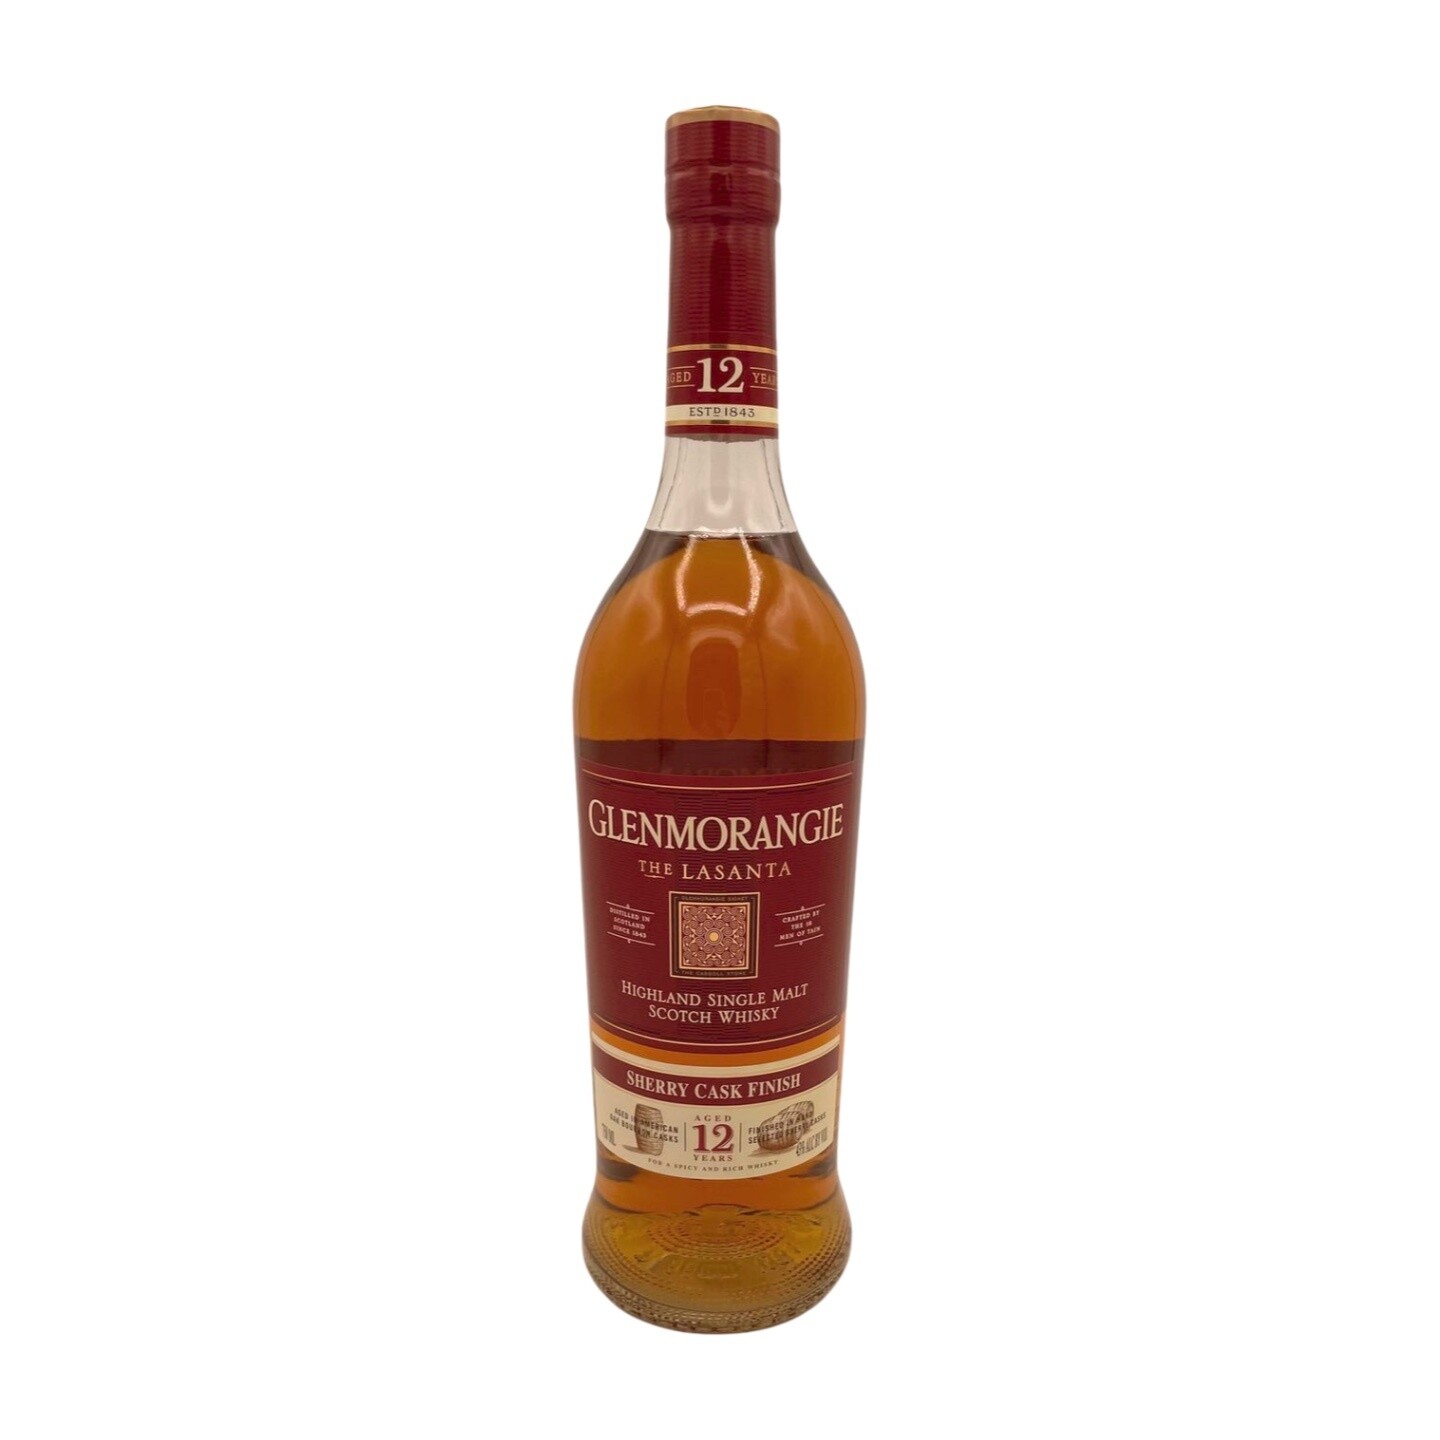 Glenmorangie 12 yr The Lasanta Sherry Cask Highland Single Malt Scotch Whisky 43% (750 ml)